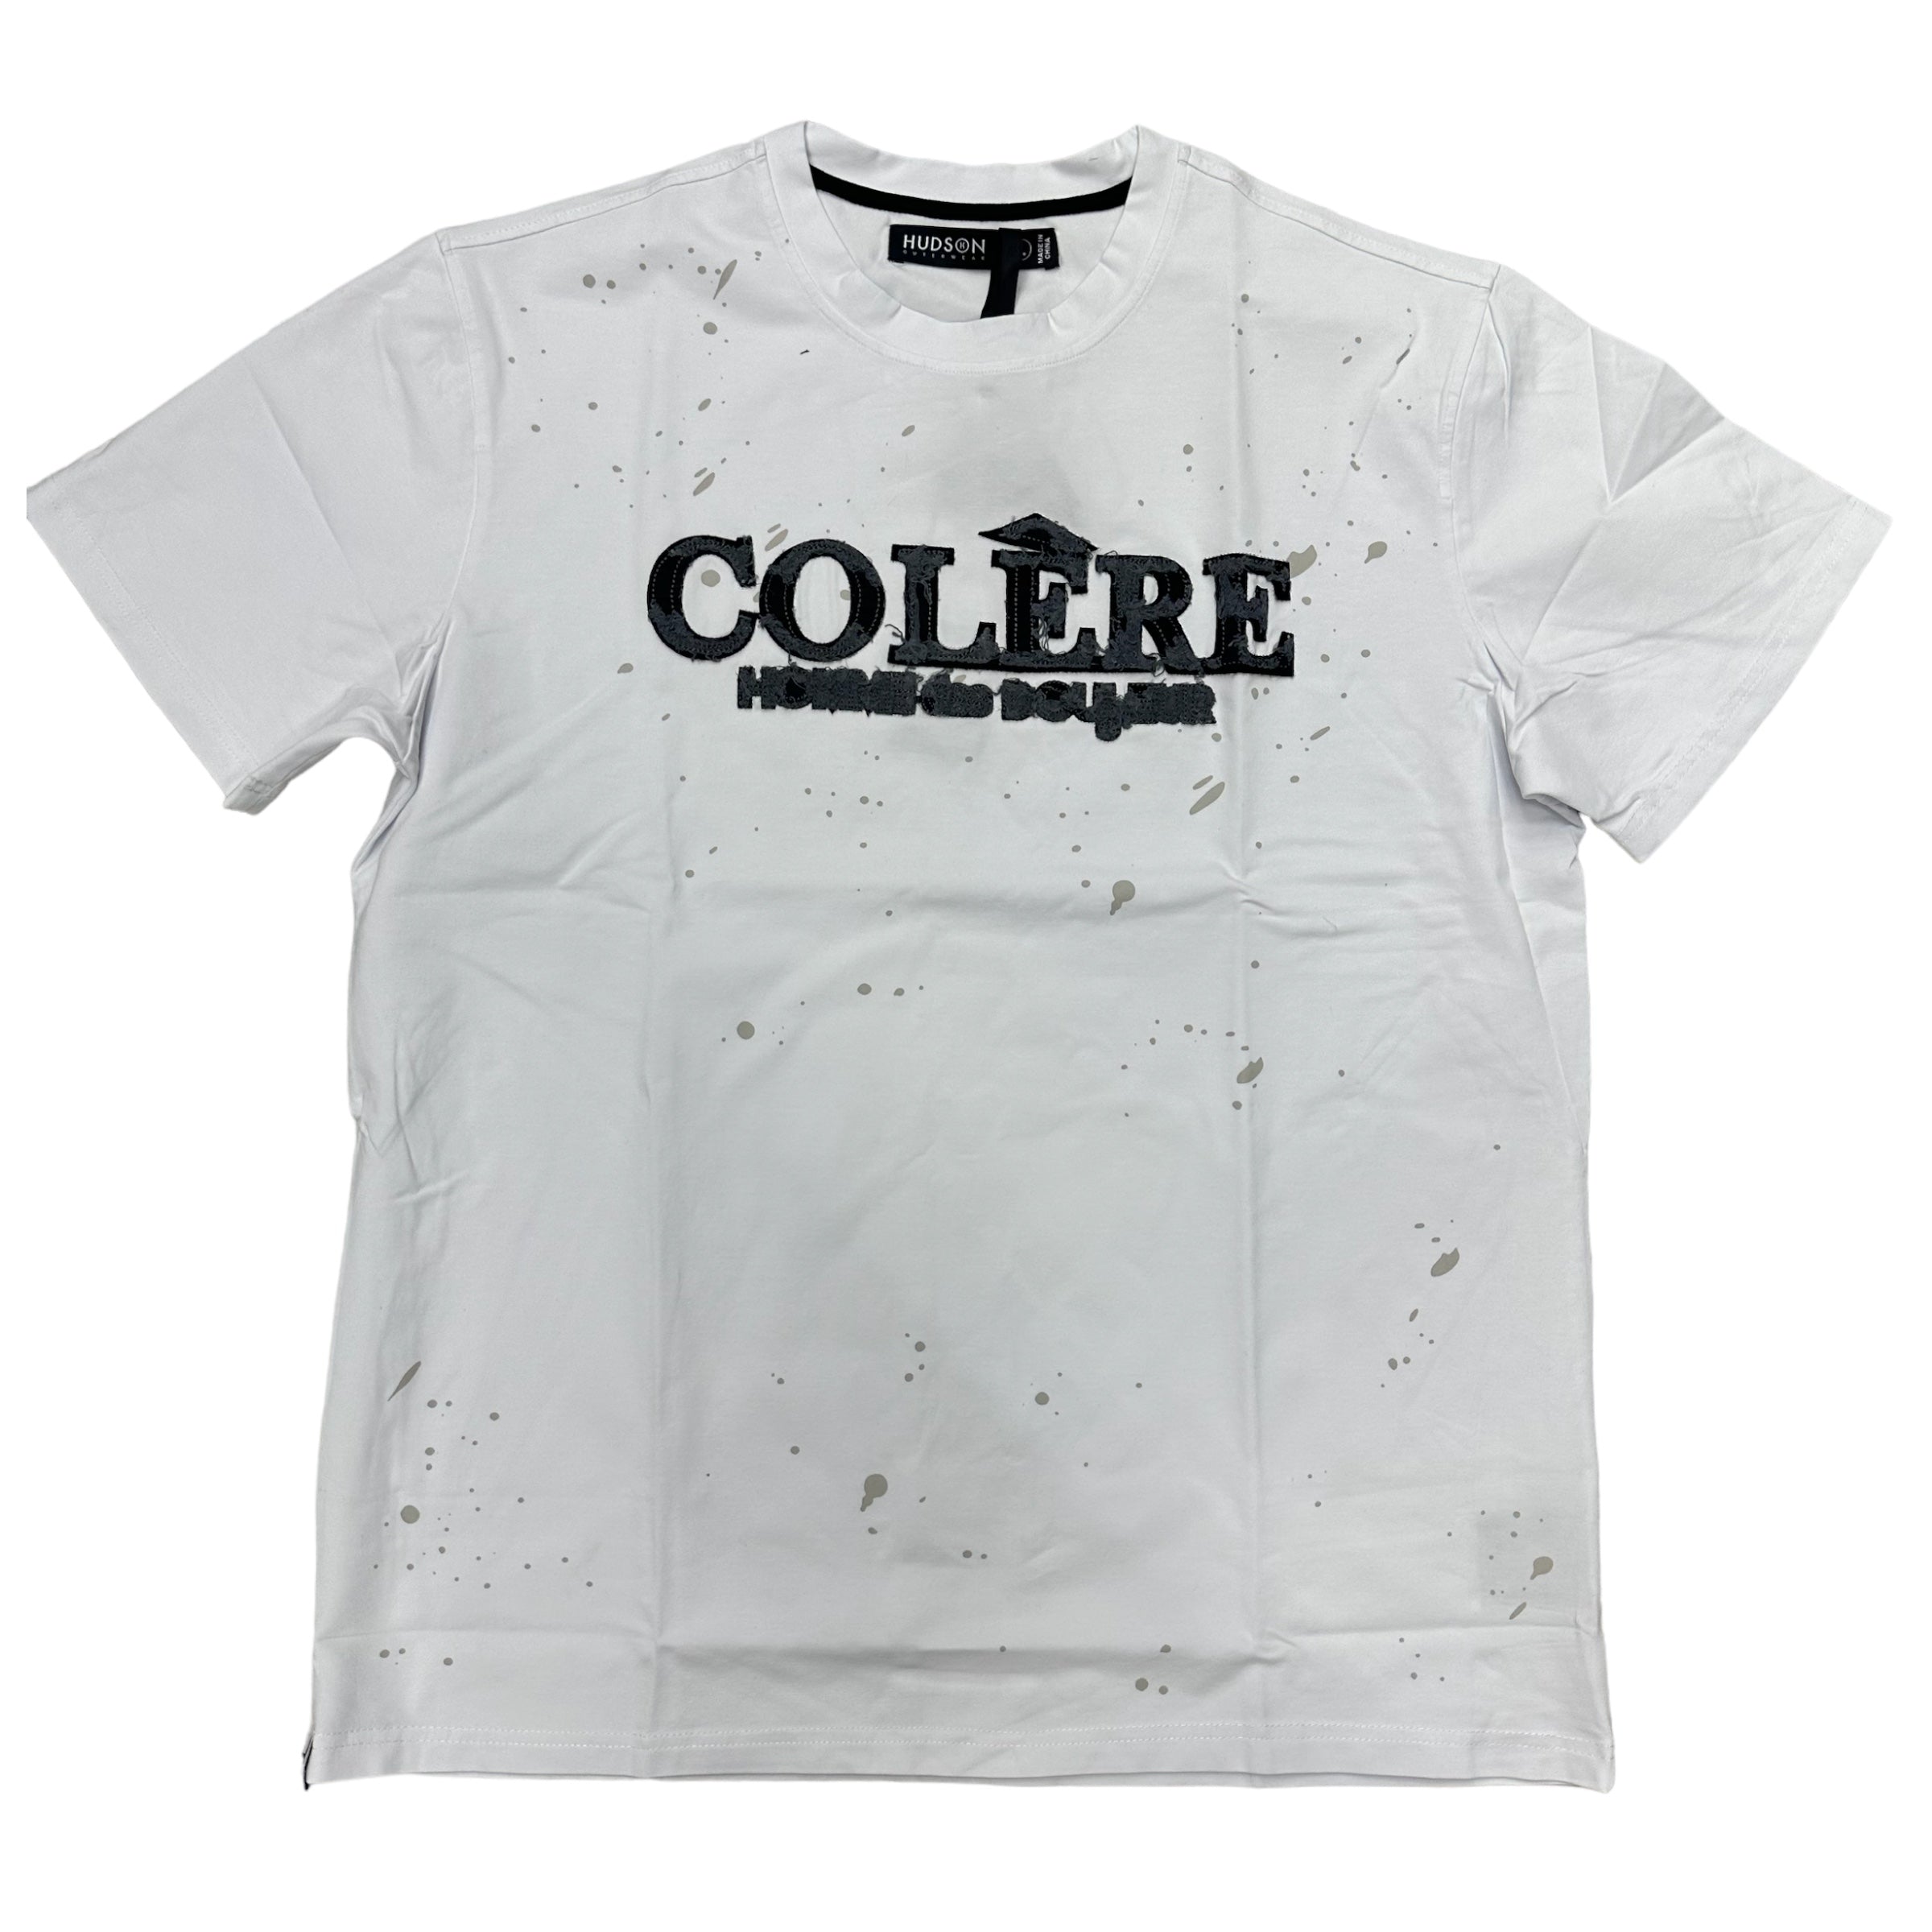 Hudson Colere T-shirt White